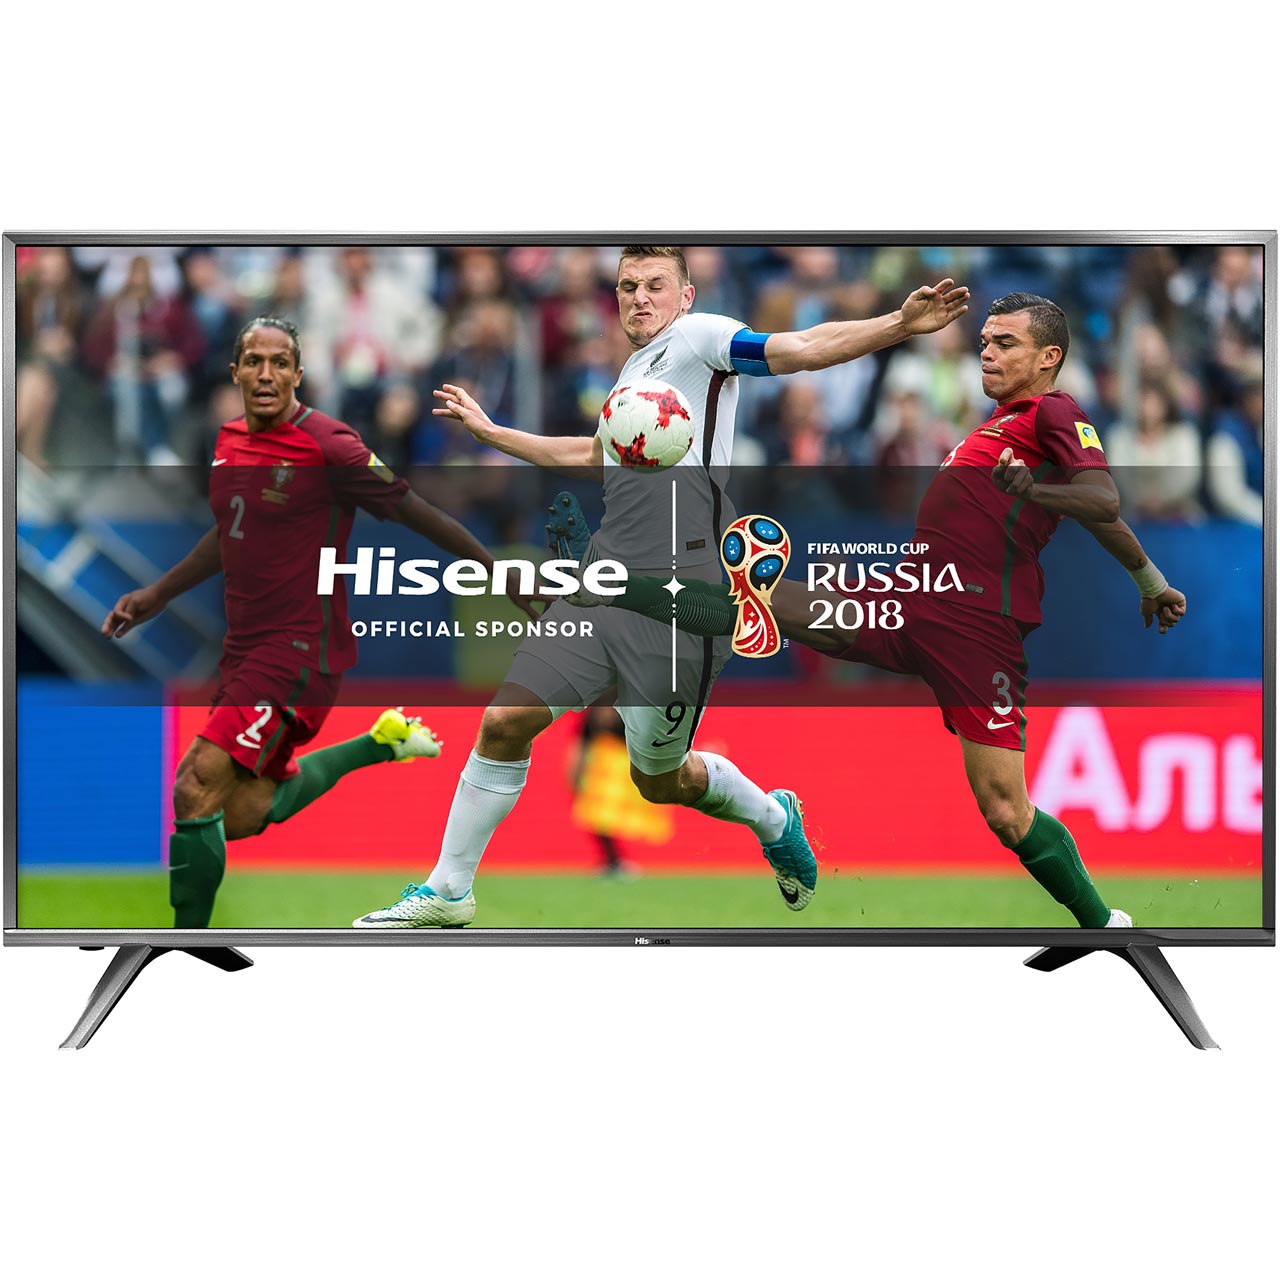 Hisense cheap tv deals